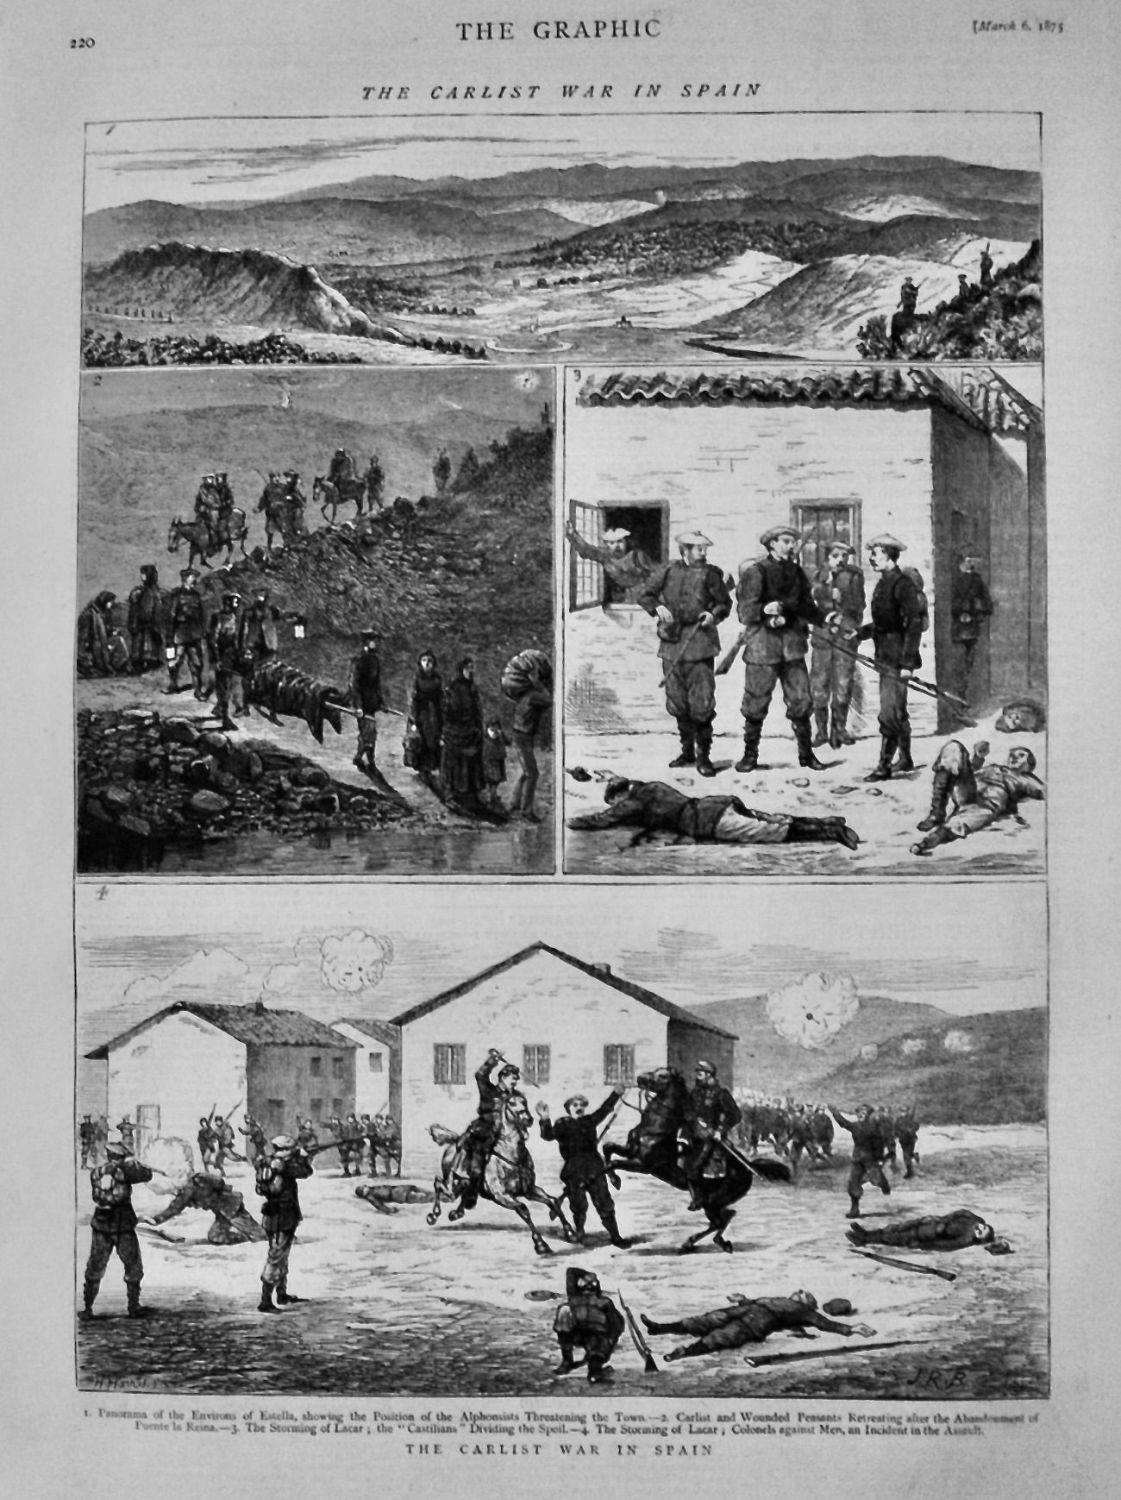 The Carlist War in Spain. 1875.